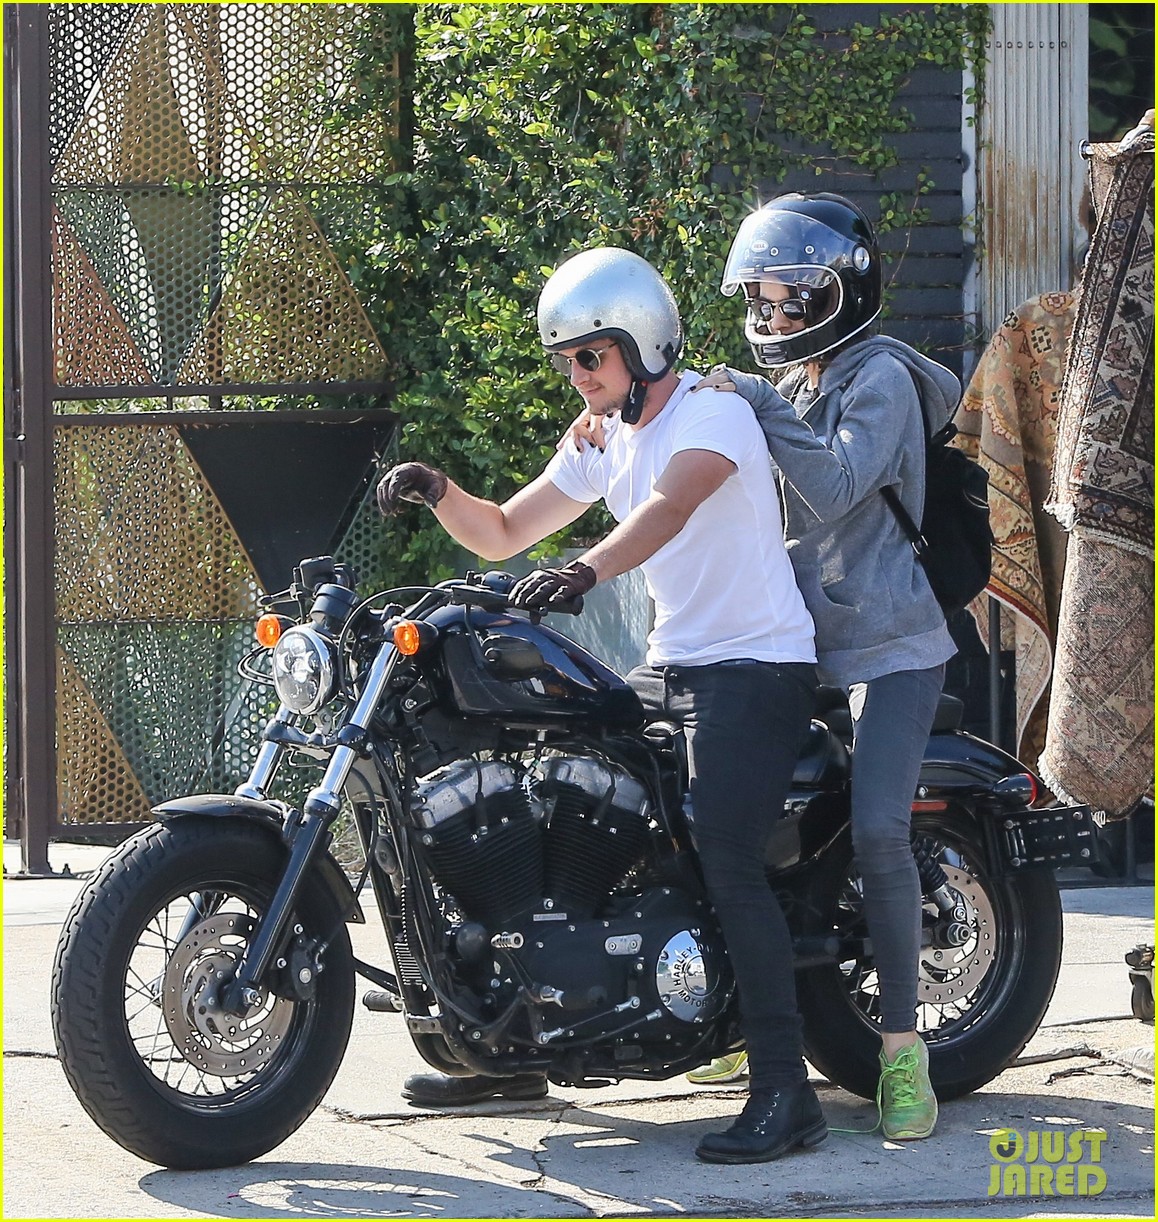 josh hutcherson girlfriend claudia traisac ride around on his motorcycle03016mytext